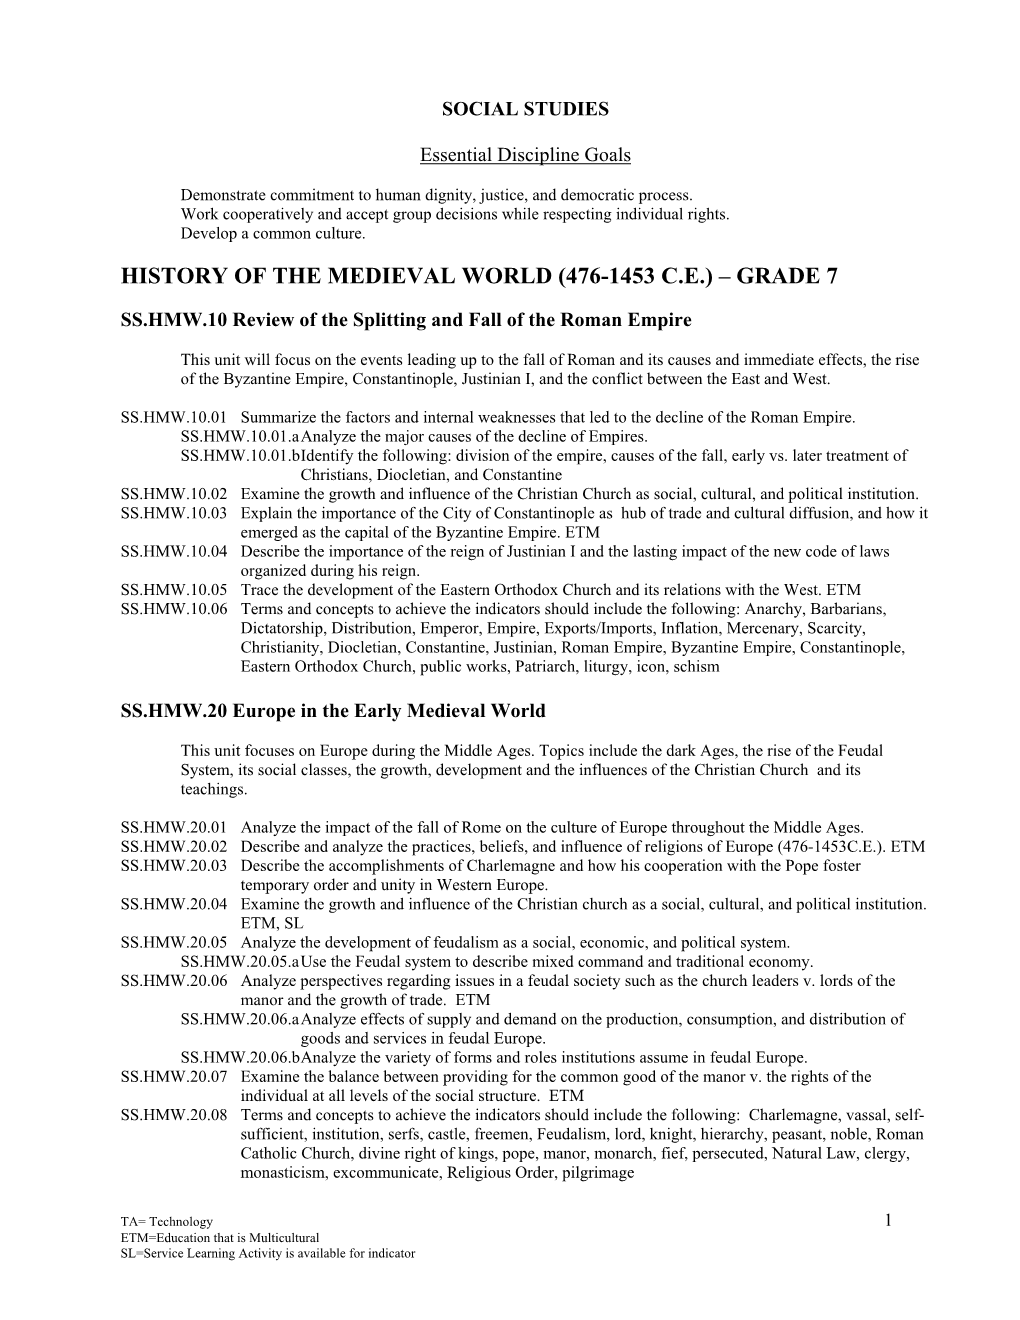 History of the Medieval World (476-1453 C.E.) – Grade 7